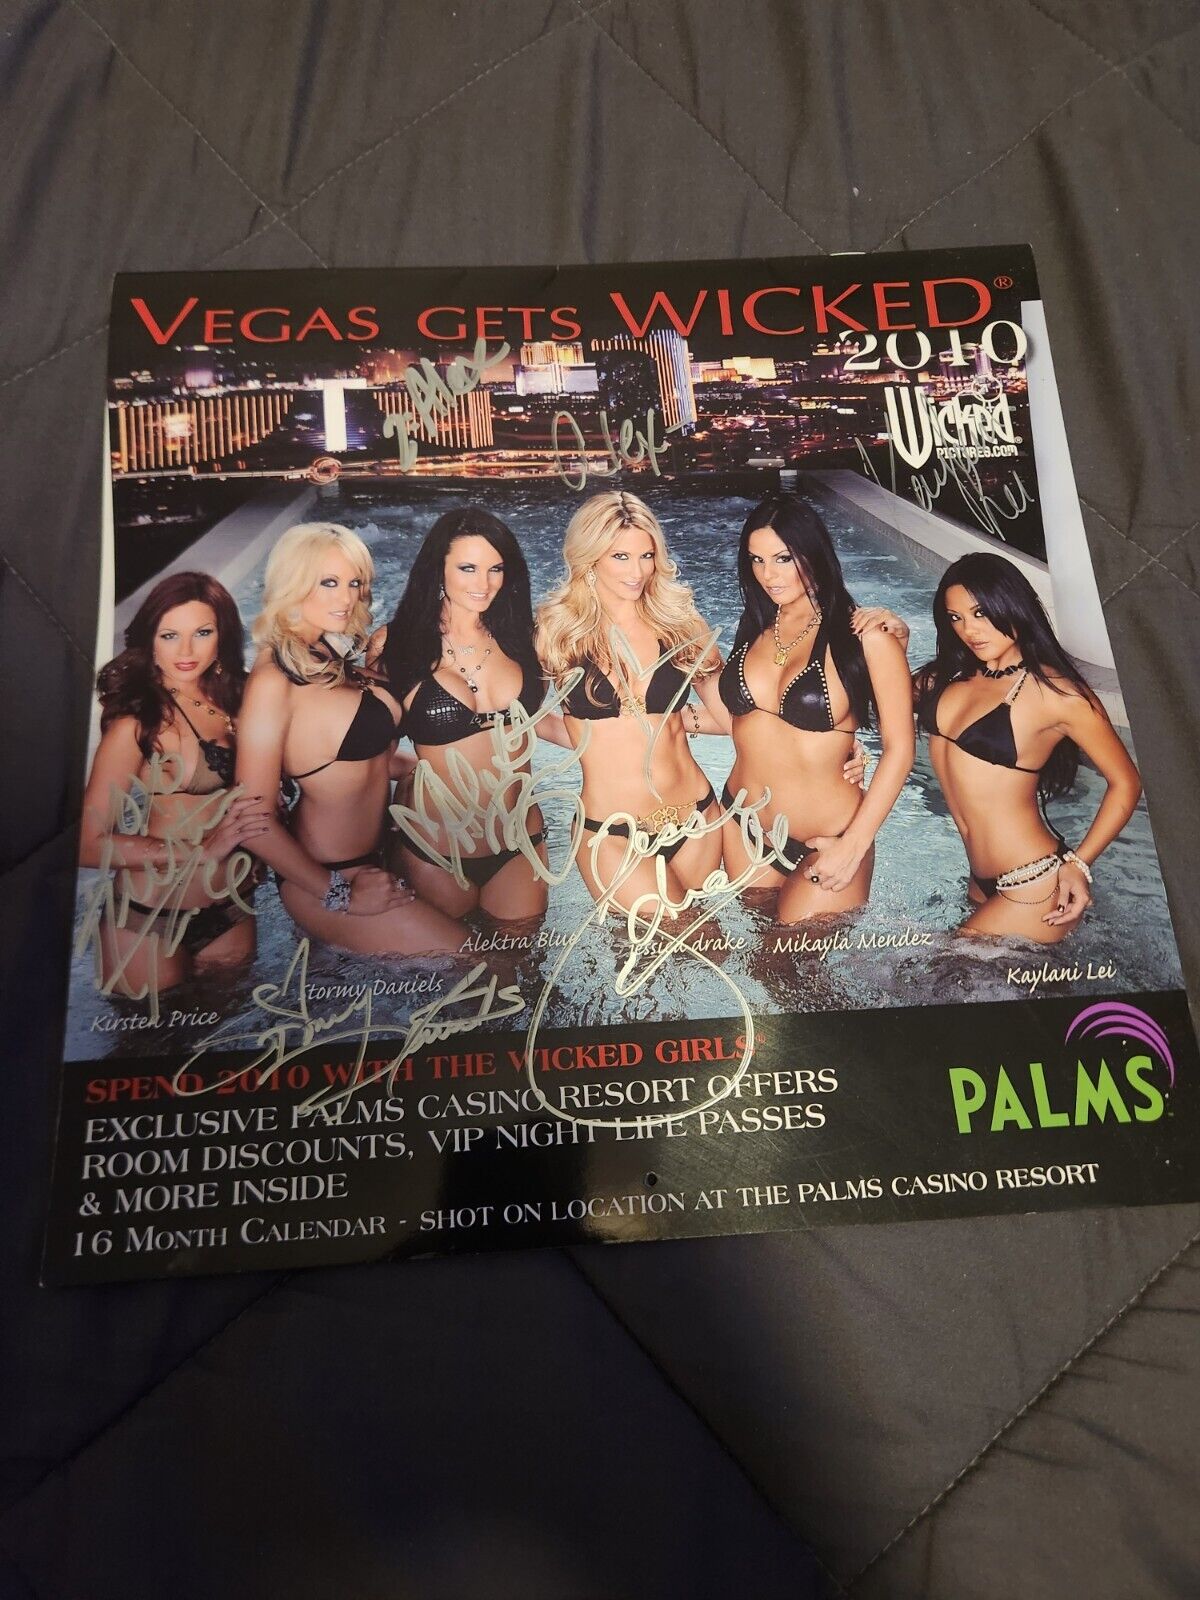 Stormy daniels /Palms Casino/Calendar 2010/ Wicked Girls/signed autograph.